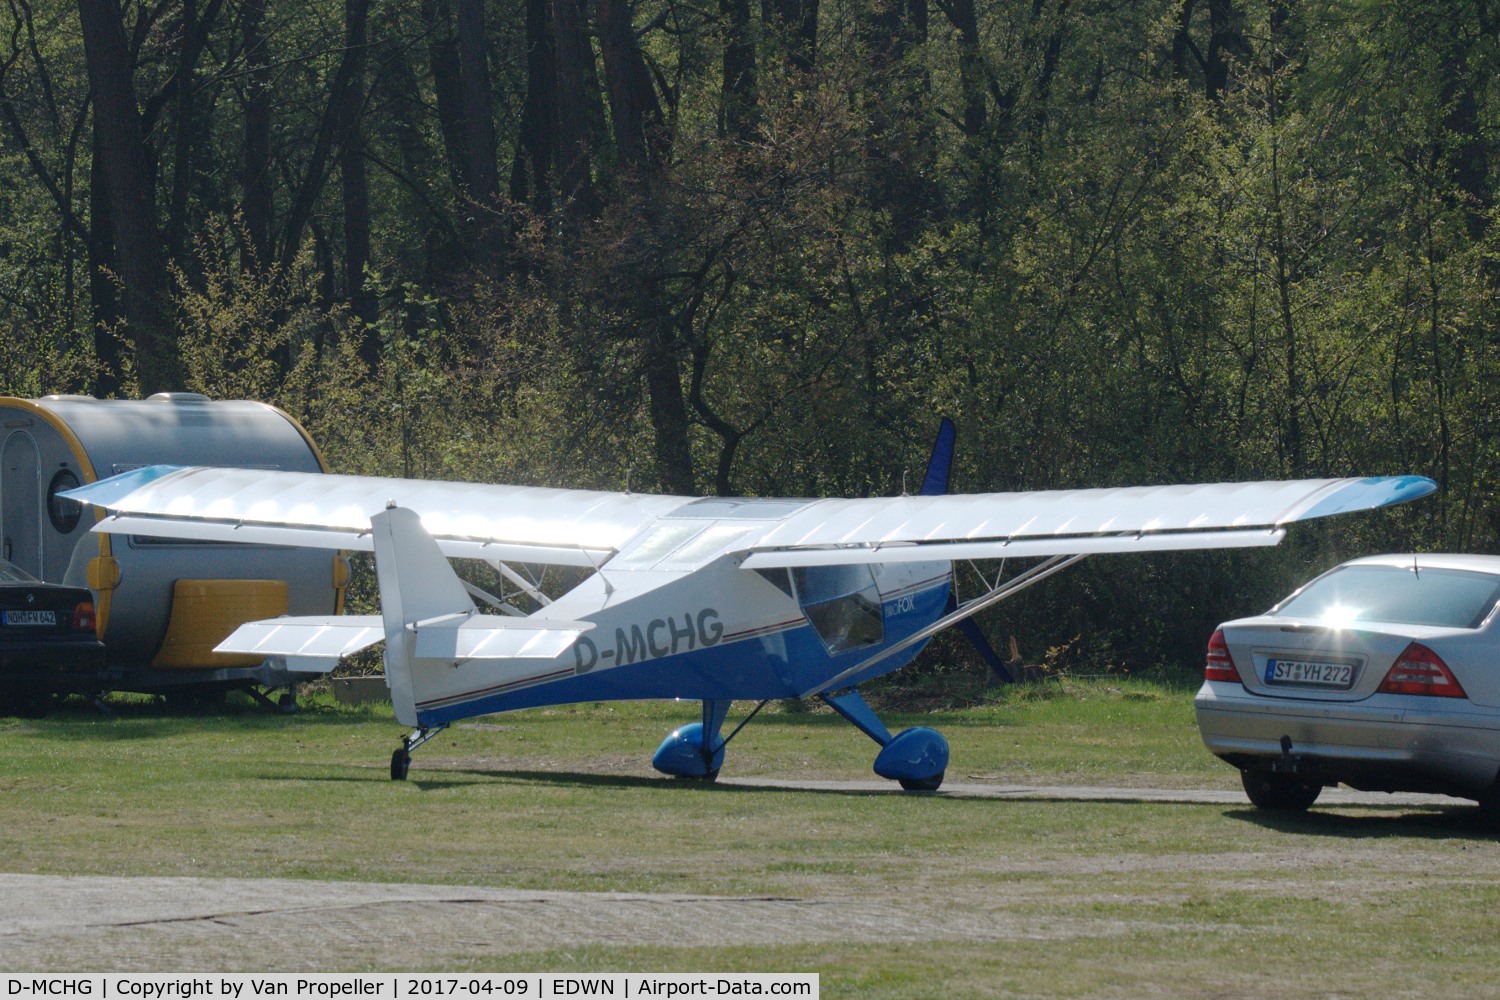 D-MCHG, Aeropro Eurofox C/N 14404, Aeropro EuroFox parked at Klausheide (Nordhorn-Lingen) airfield, Germany